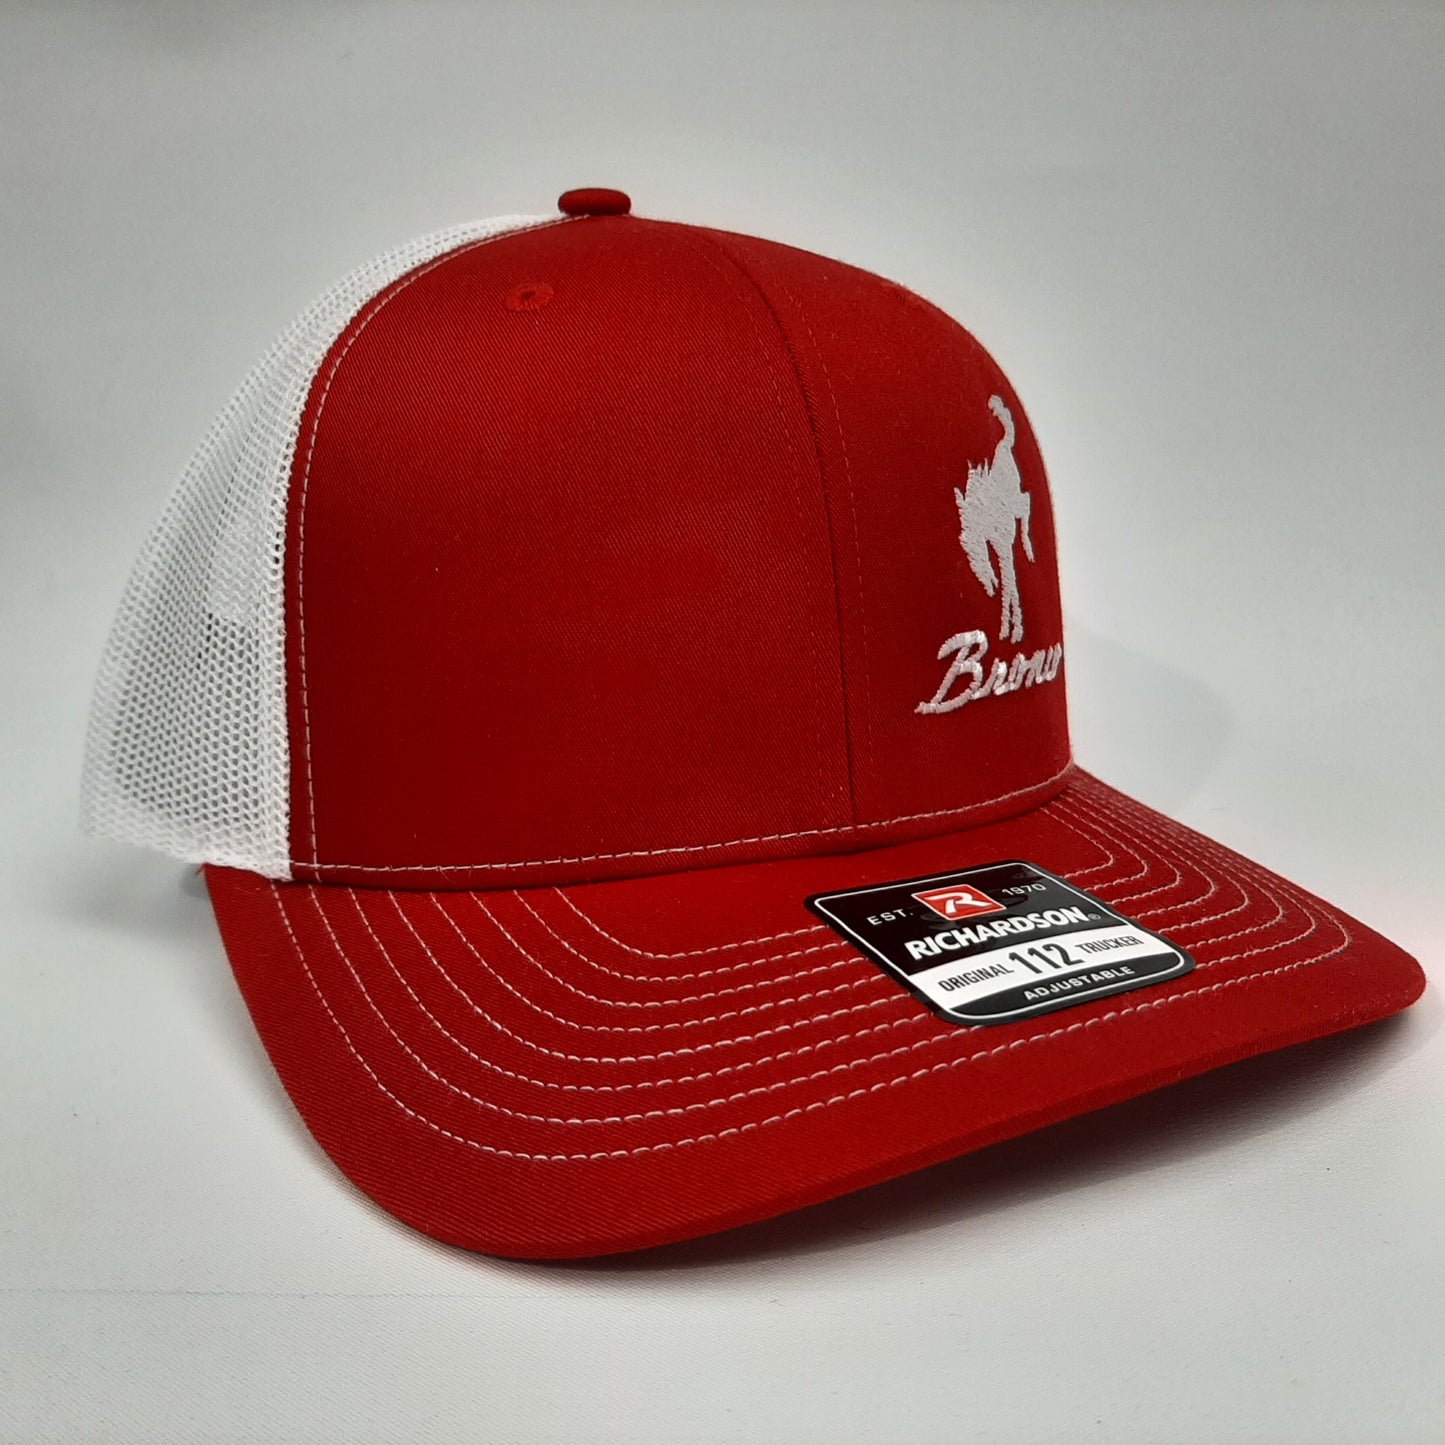 Ford Bronco Richardson 112 Trucker Mesh Snapback Cap Hat Red & White